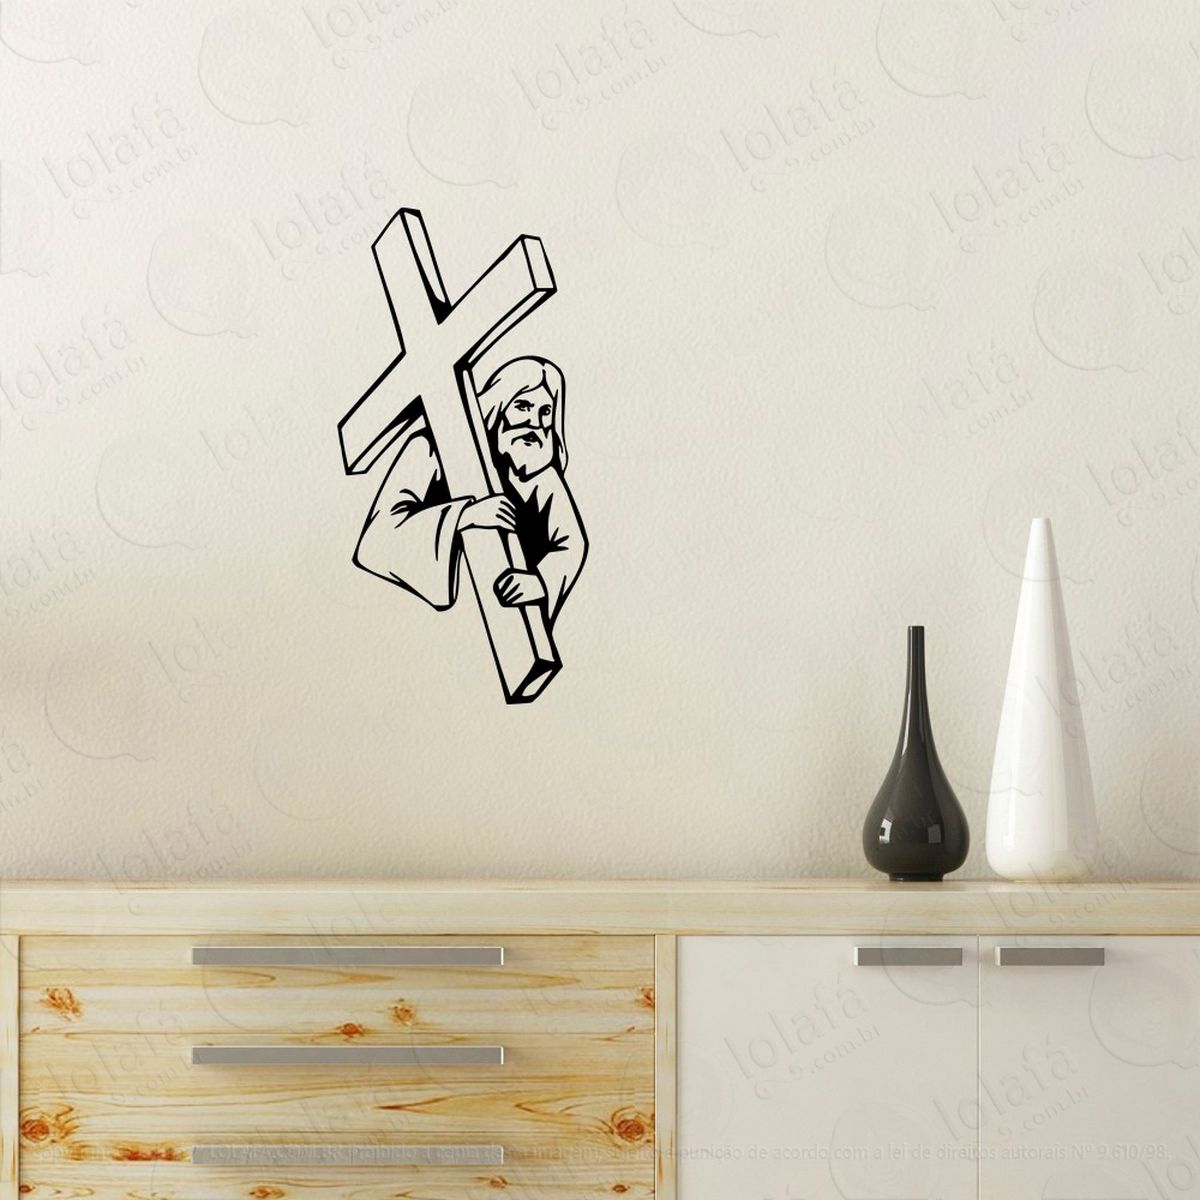 jesus cristo adesivo de parede decorativo para casa, quarto, sala e vidro - mod:46